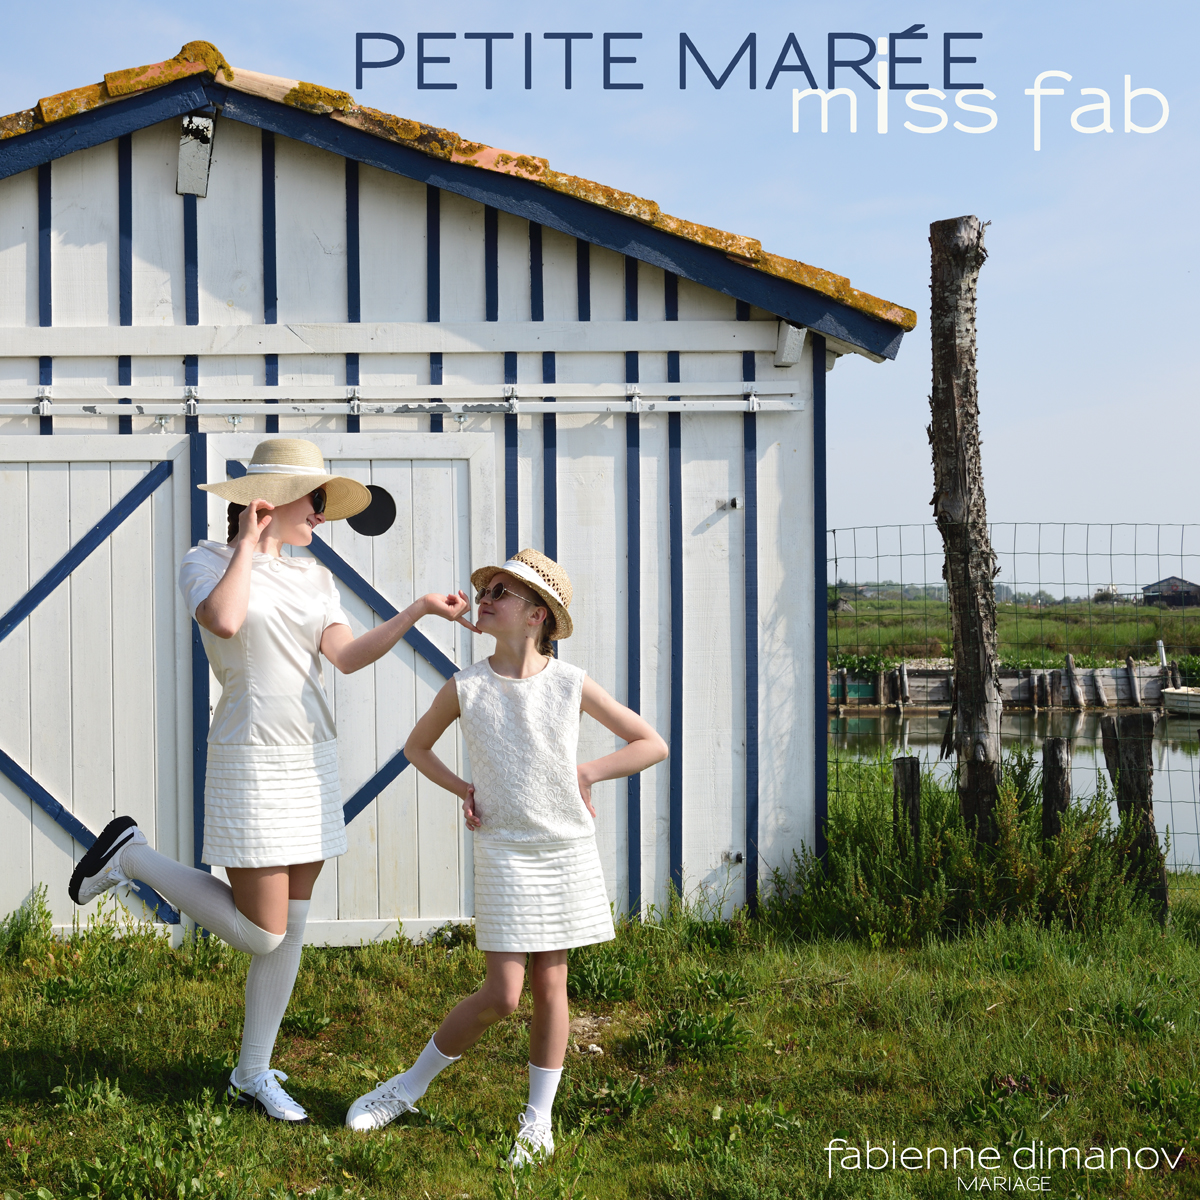 PETITE MARIÉE vs PETITE MARÉE - MISS FAB - Fabienne dimanov Mariage